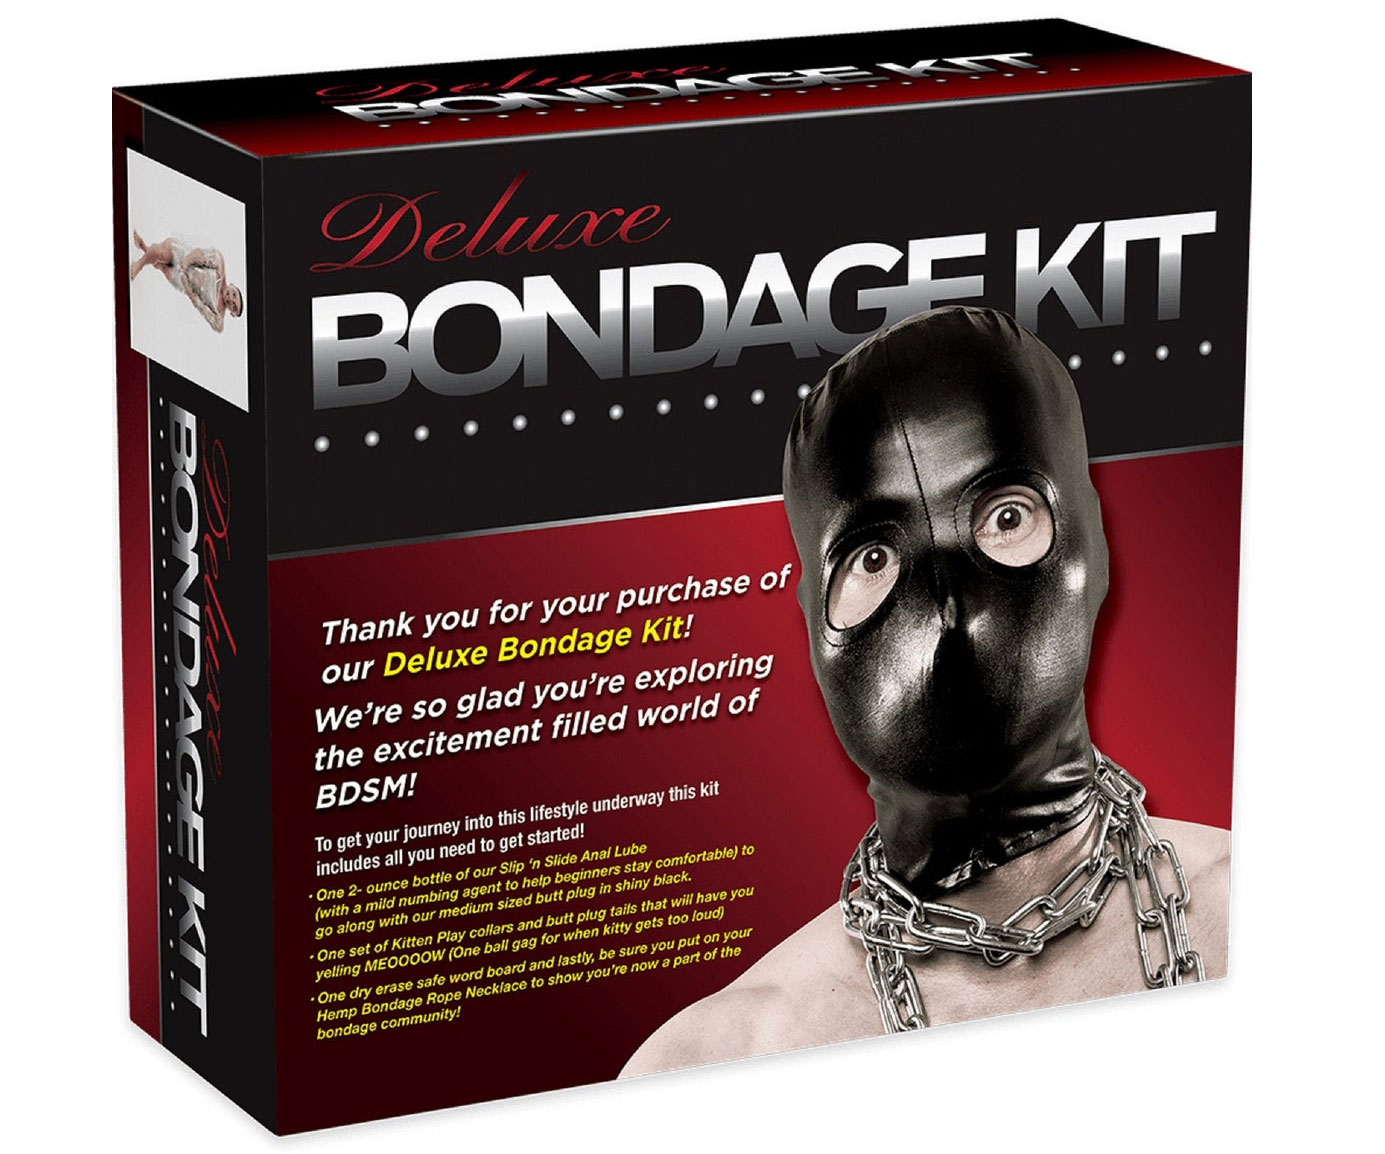 Deluxe Bondage Kit Prank Box